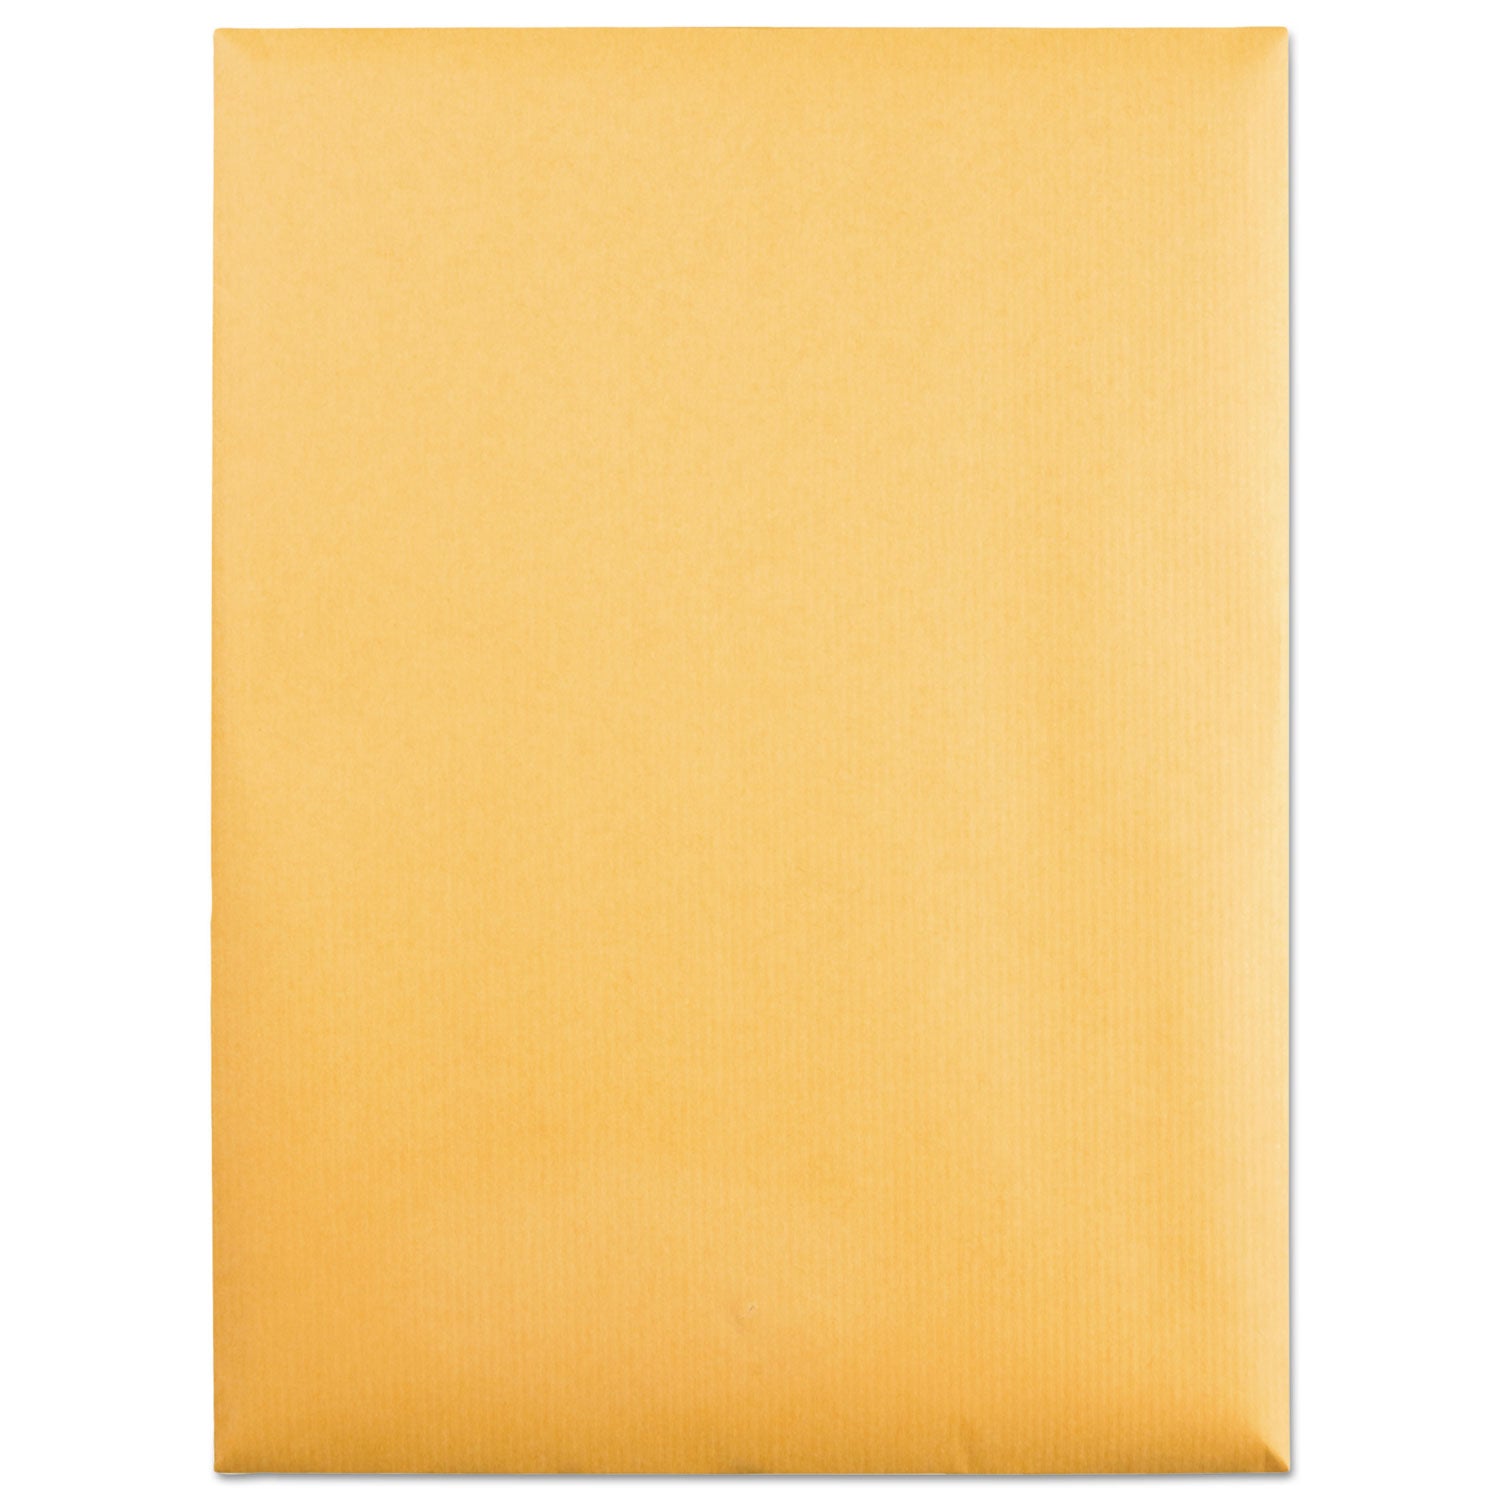 Park Ridge Kraft Clasp Envelope, #90, Square Flap, Clasp/Gummed Closure, 9 x 12, Brown Kraft, 100/Box - 